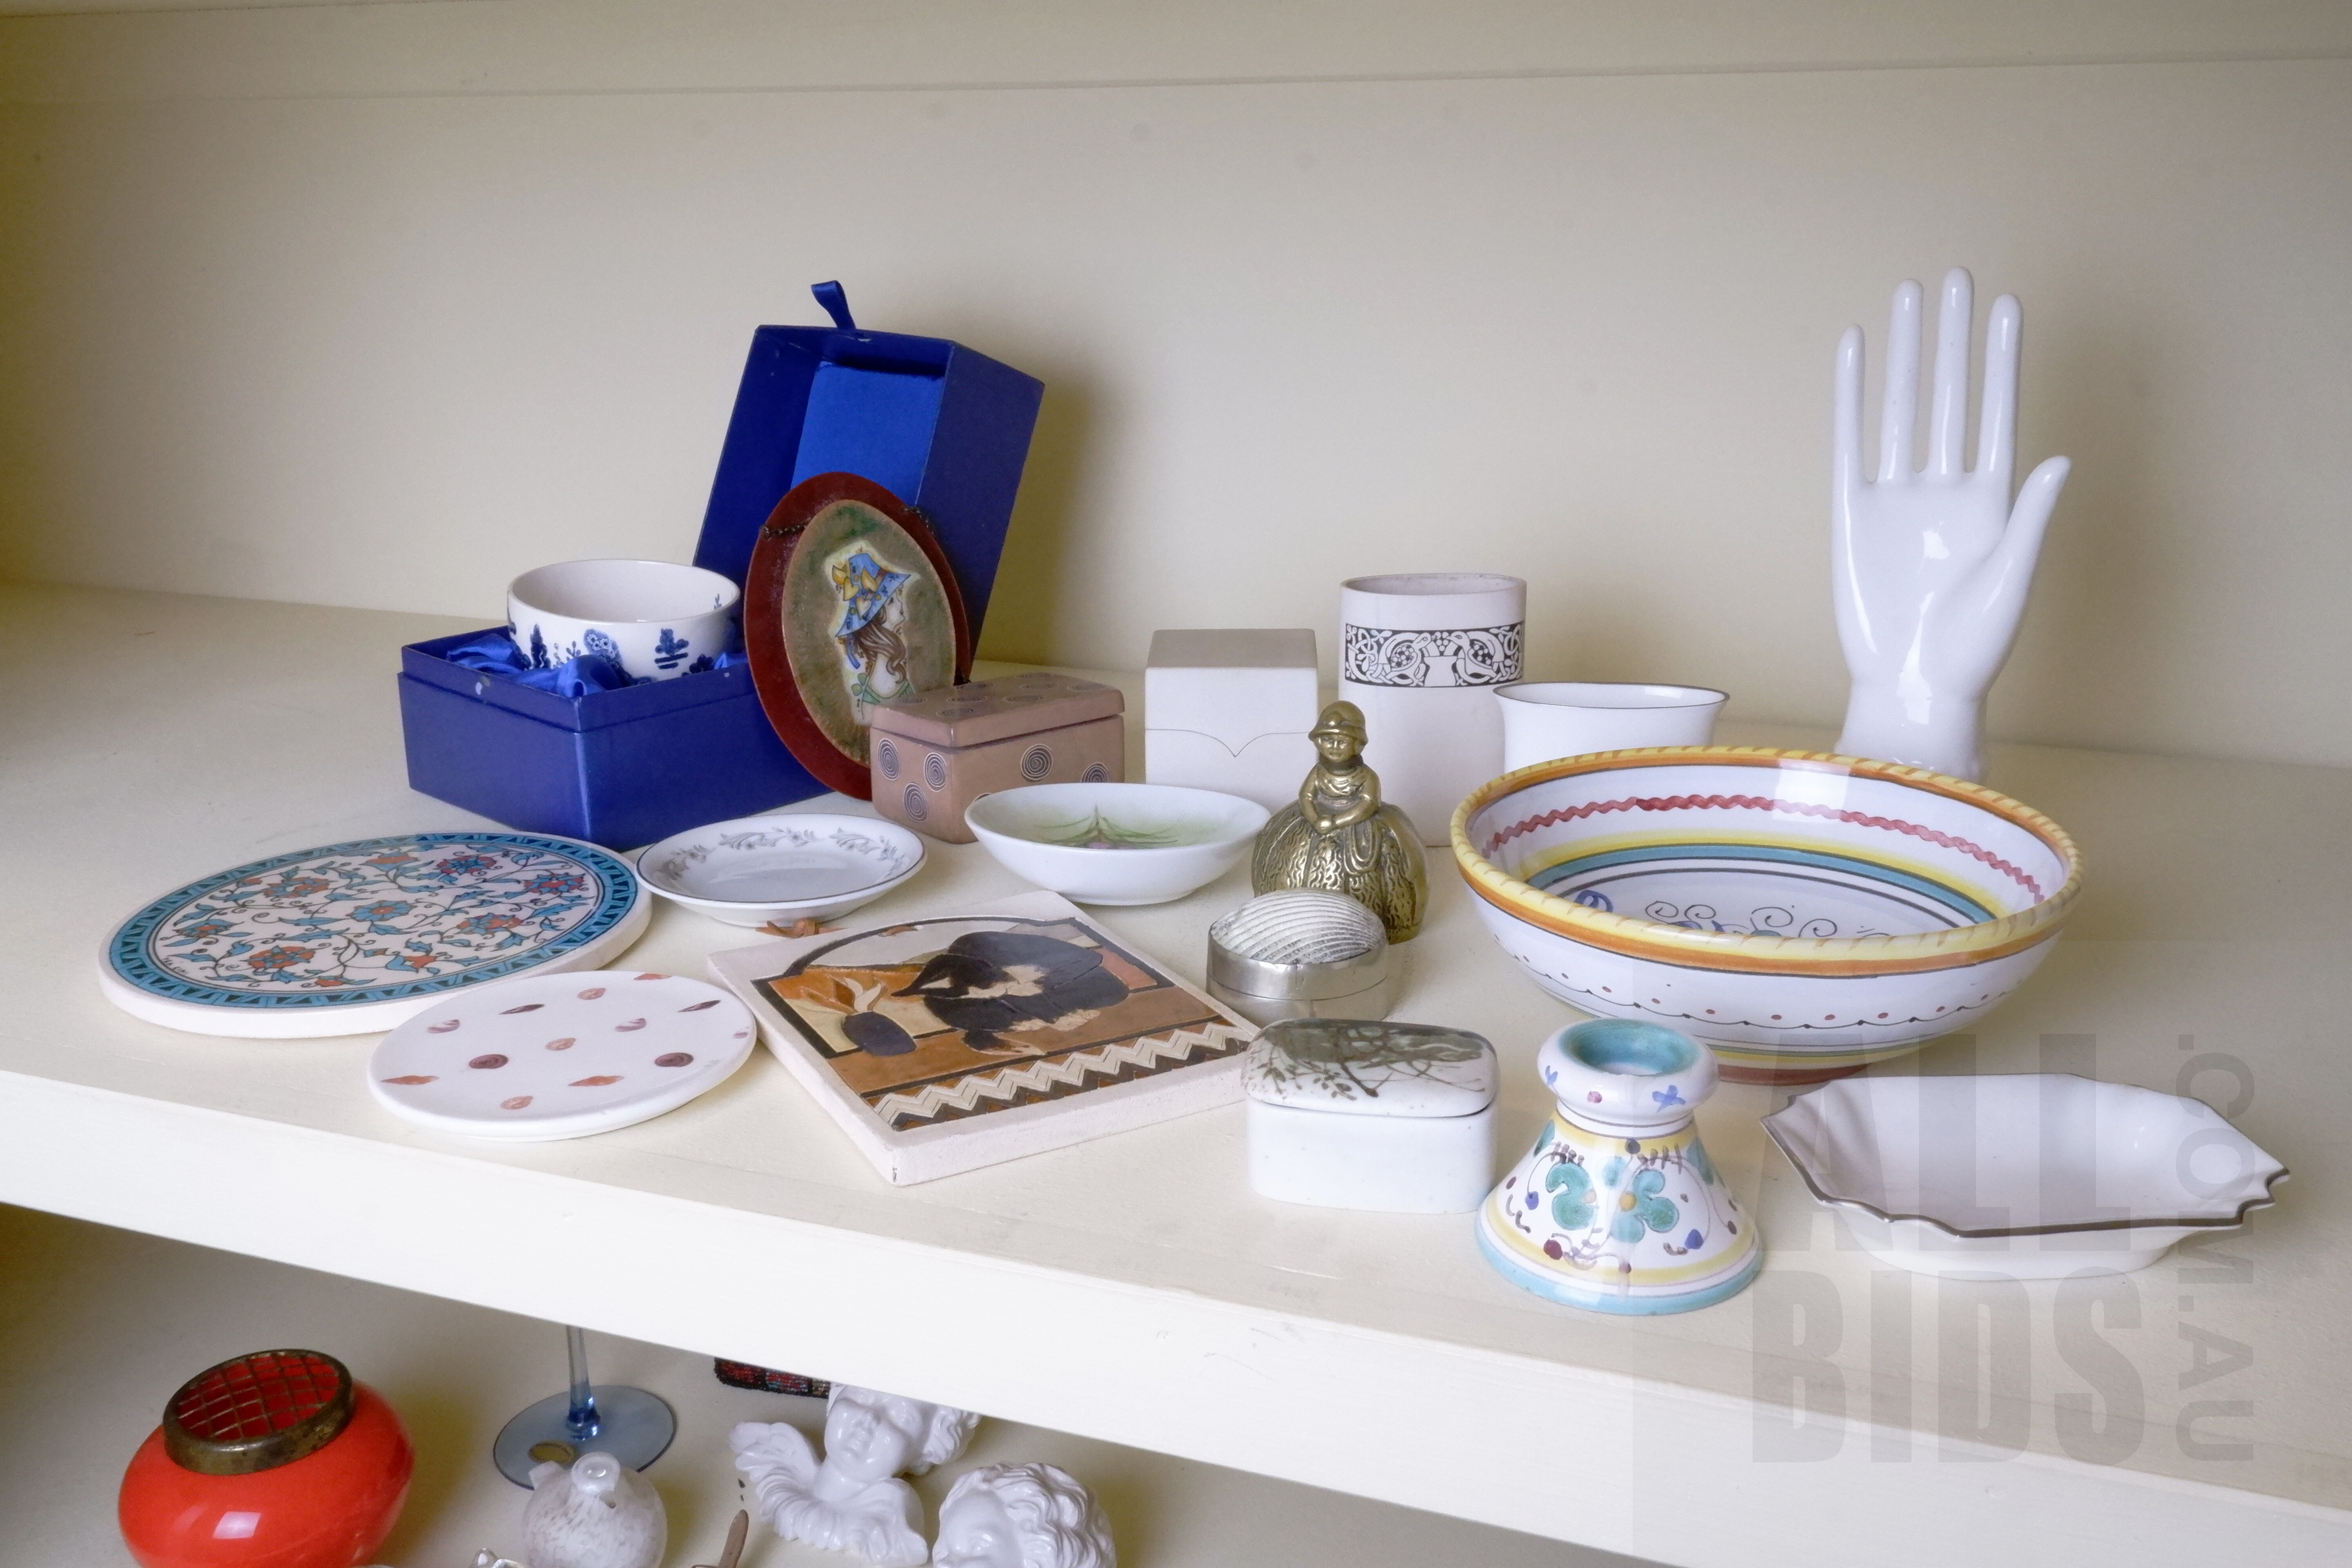 'Italian Deruta Tin Glazed Dish, Dutch Girl Brass Bell, Alison Drury Ceramic Wall Plaque, Iznik Style Ceramic Trivet and More'